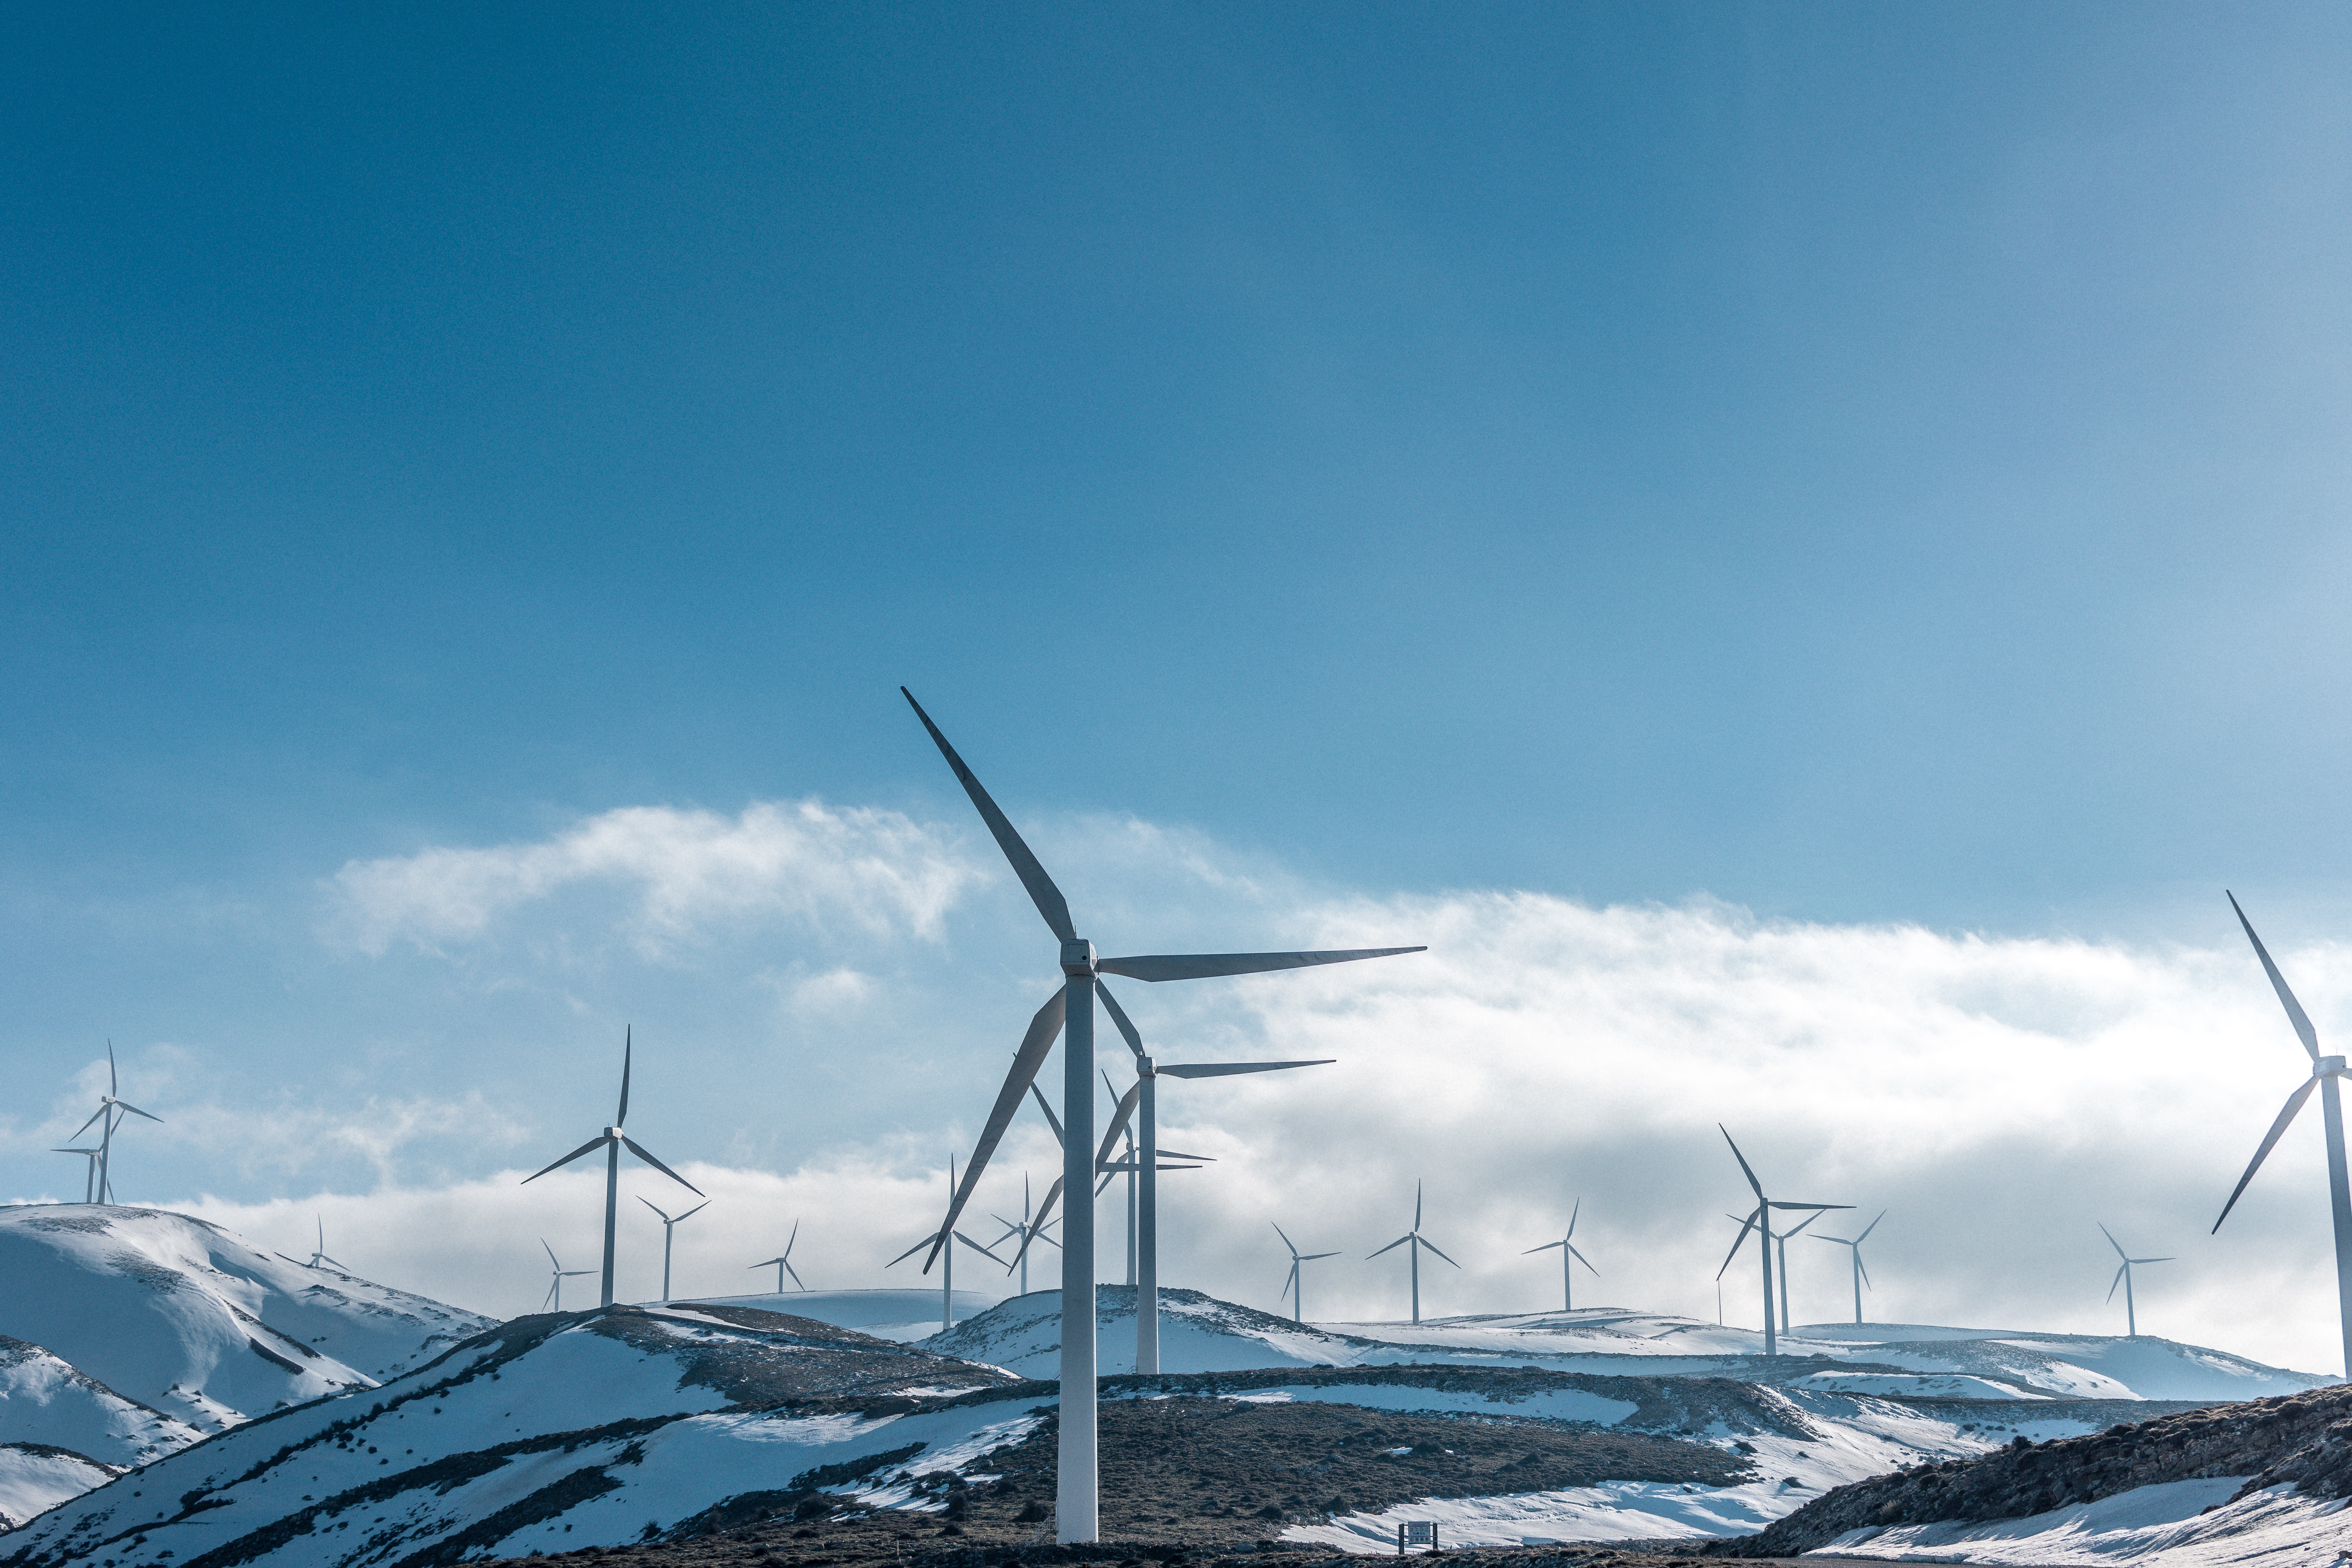 Wind turbines on snowy mountains